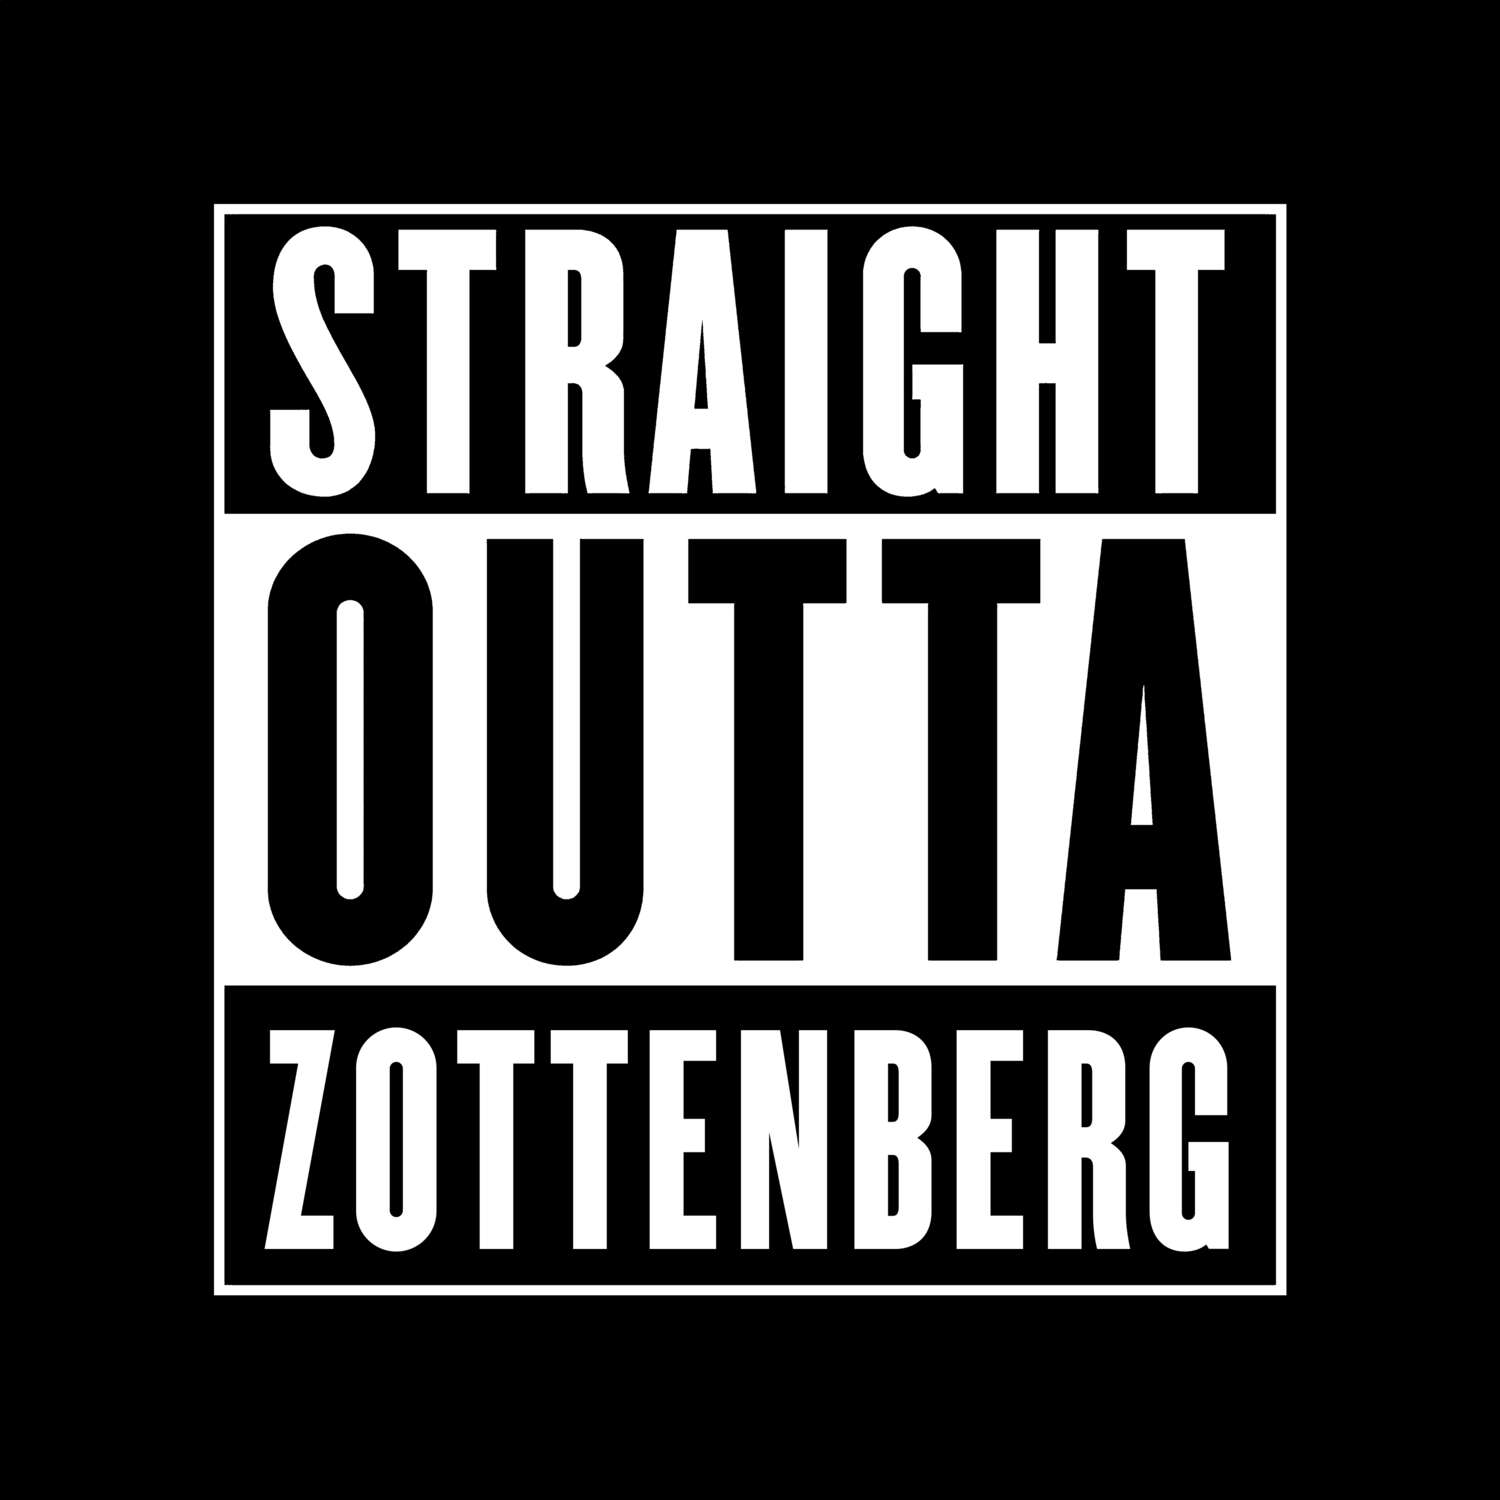 Zottenberg T-Shirt »Straight Outta«